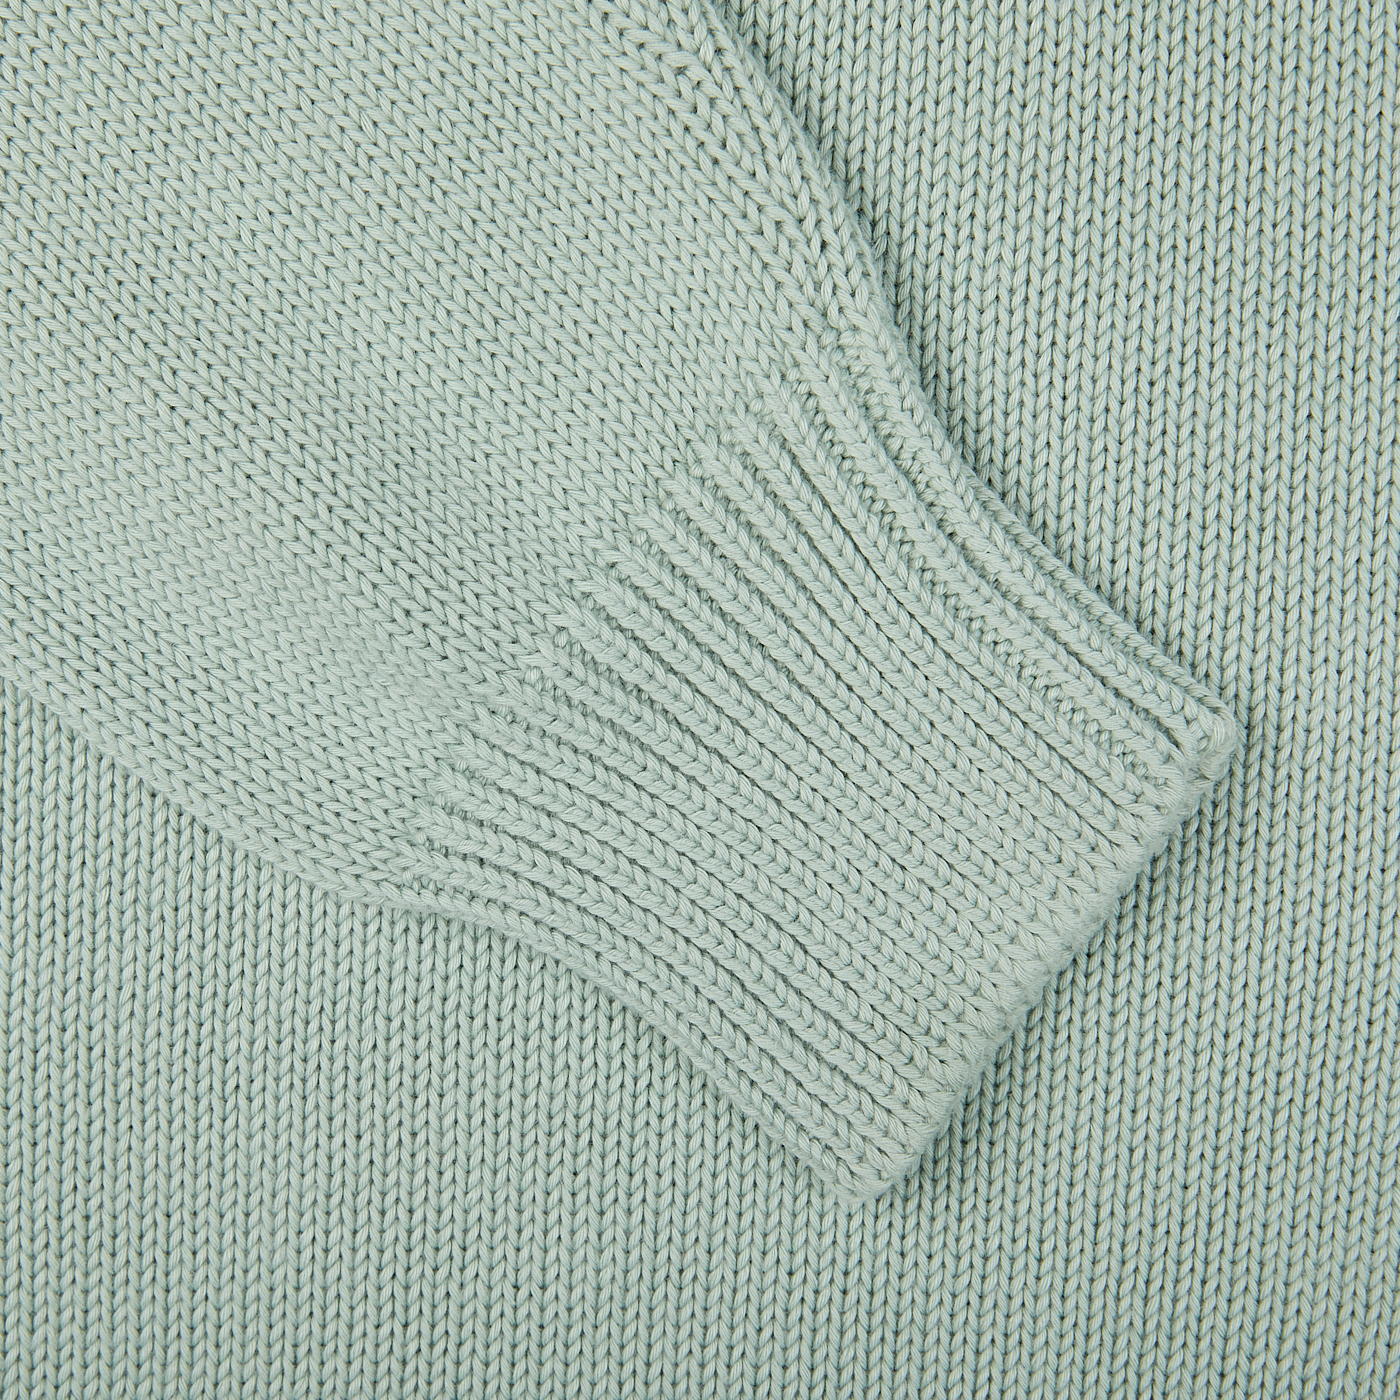 A close up of a Aqua Green Cotton Crew Neck Sweater by Zanone.